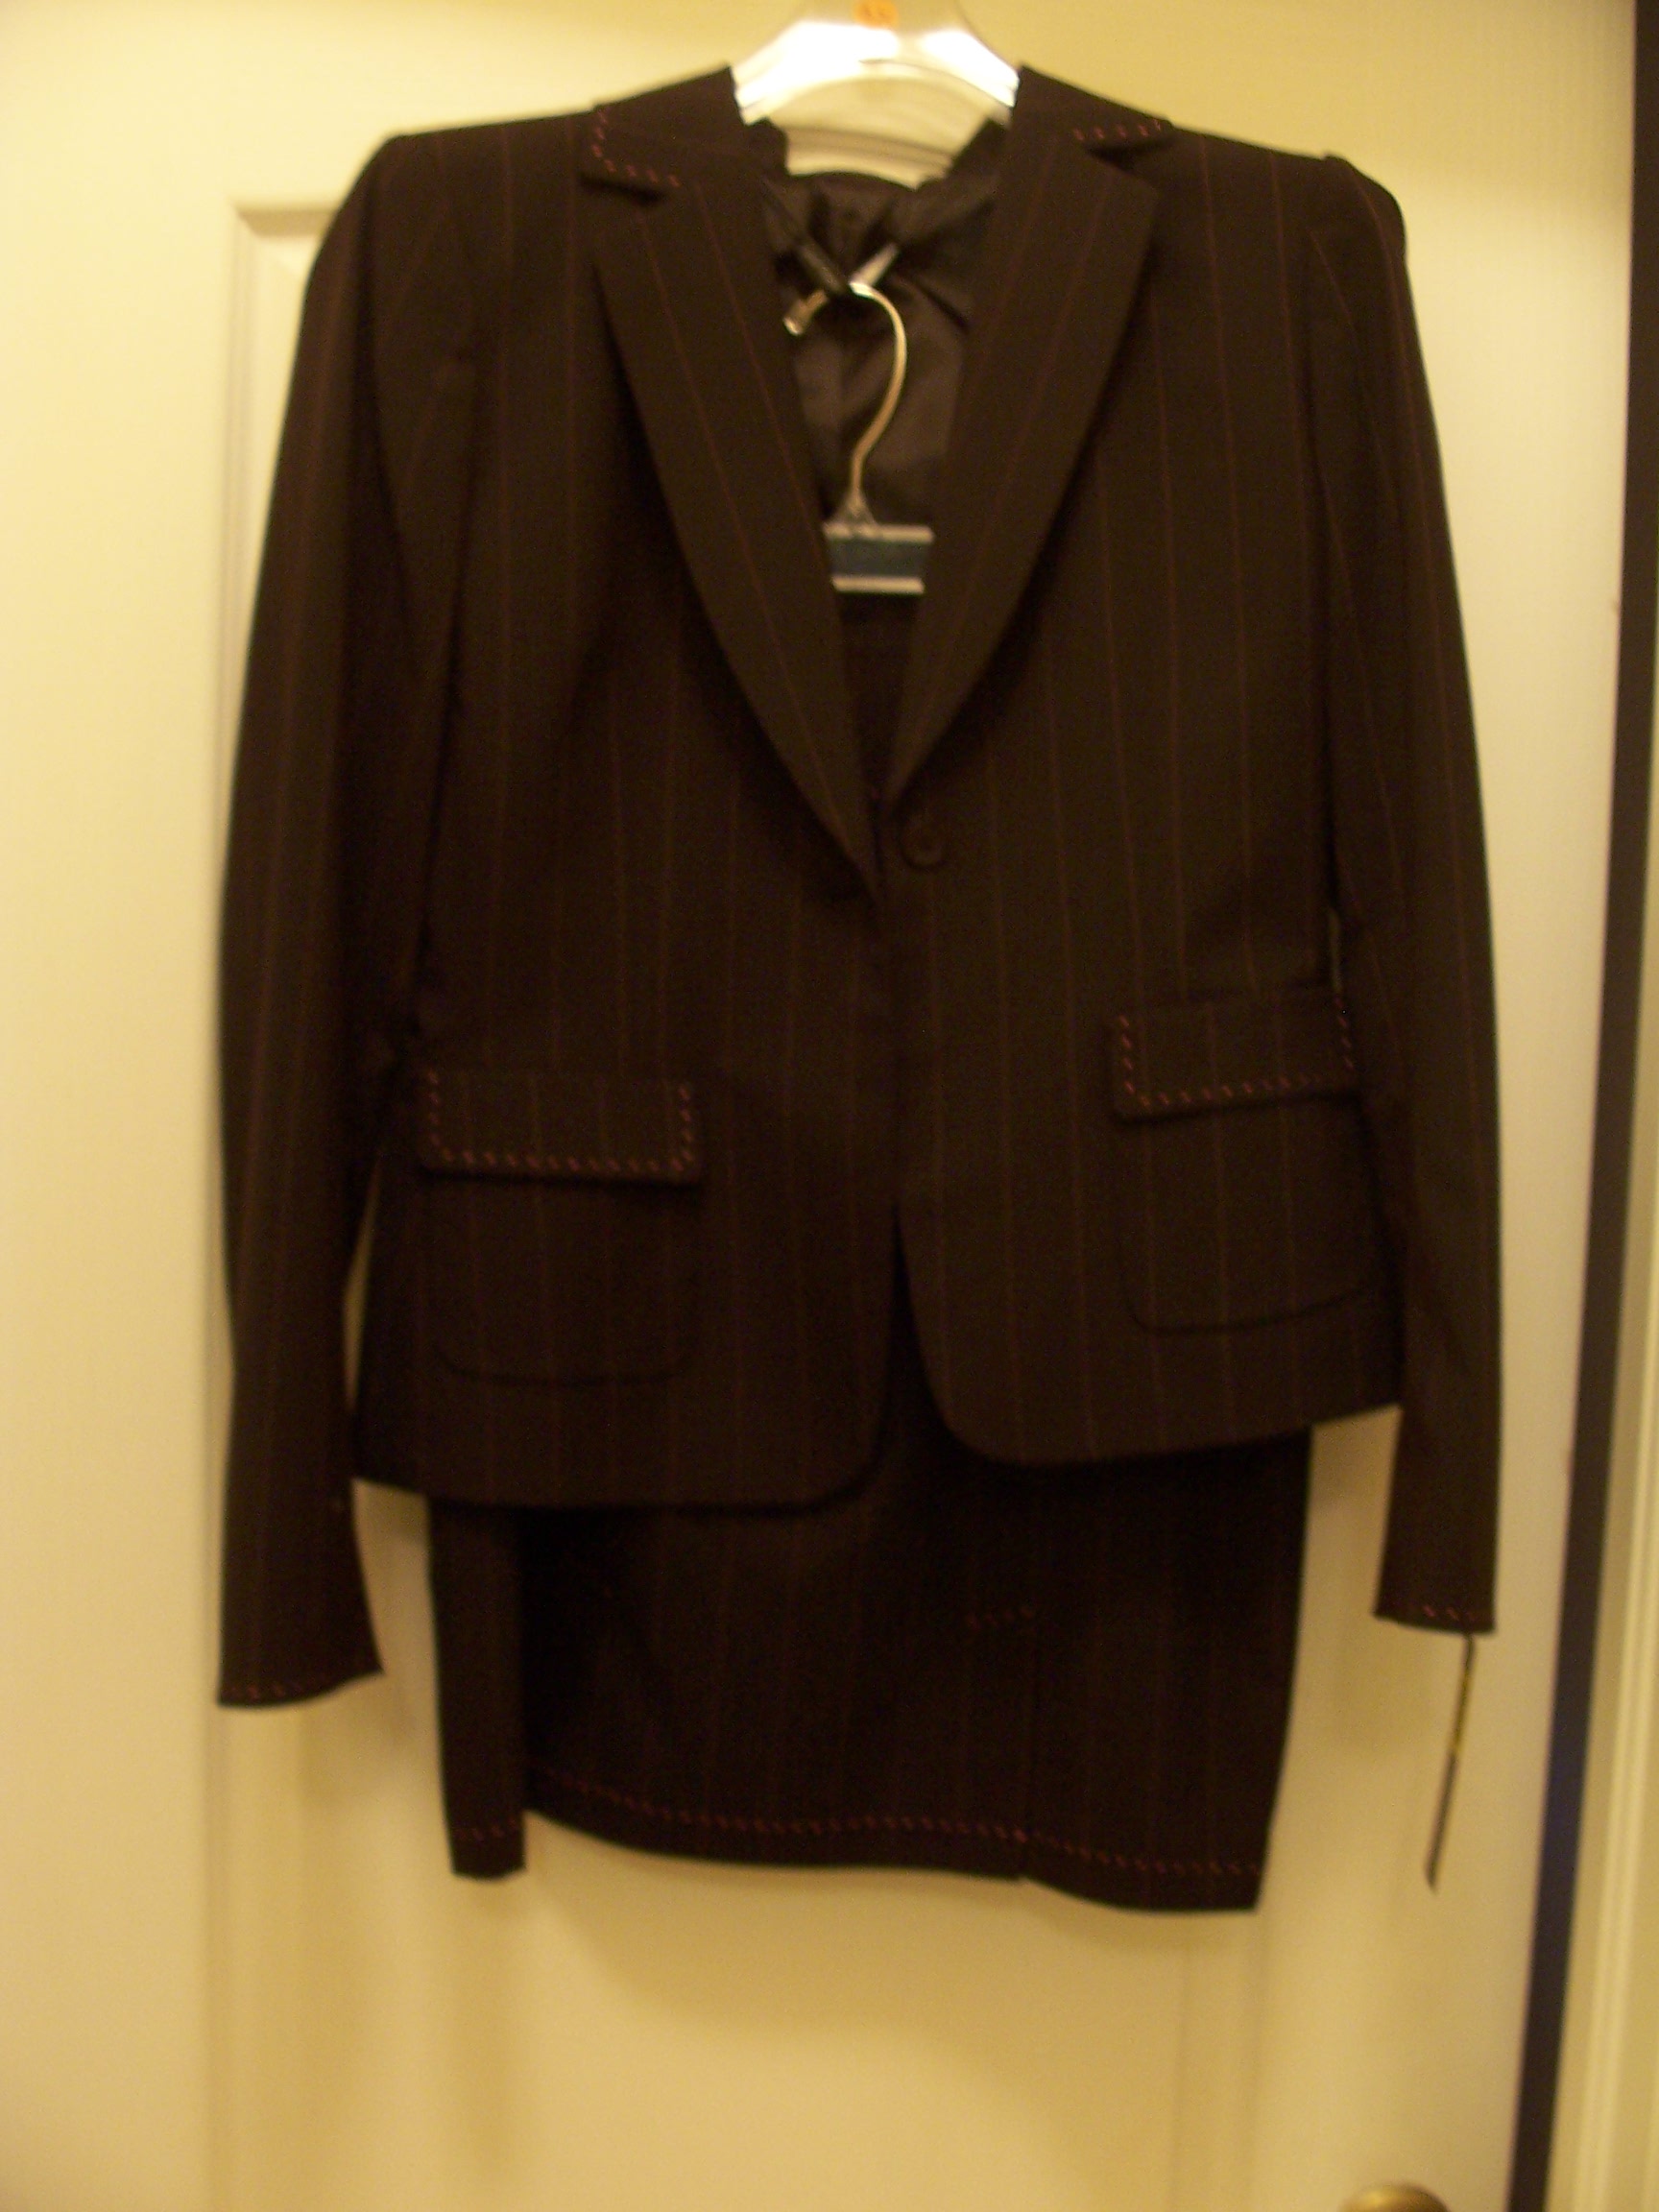 1 Antonio Melani Dress Suit